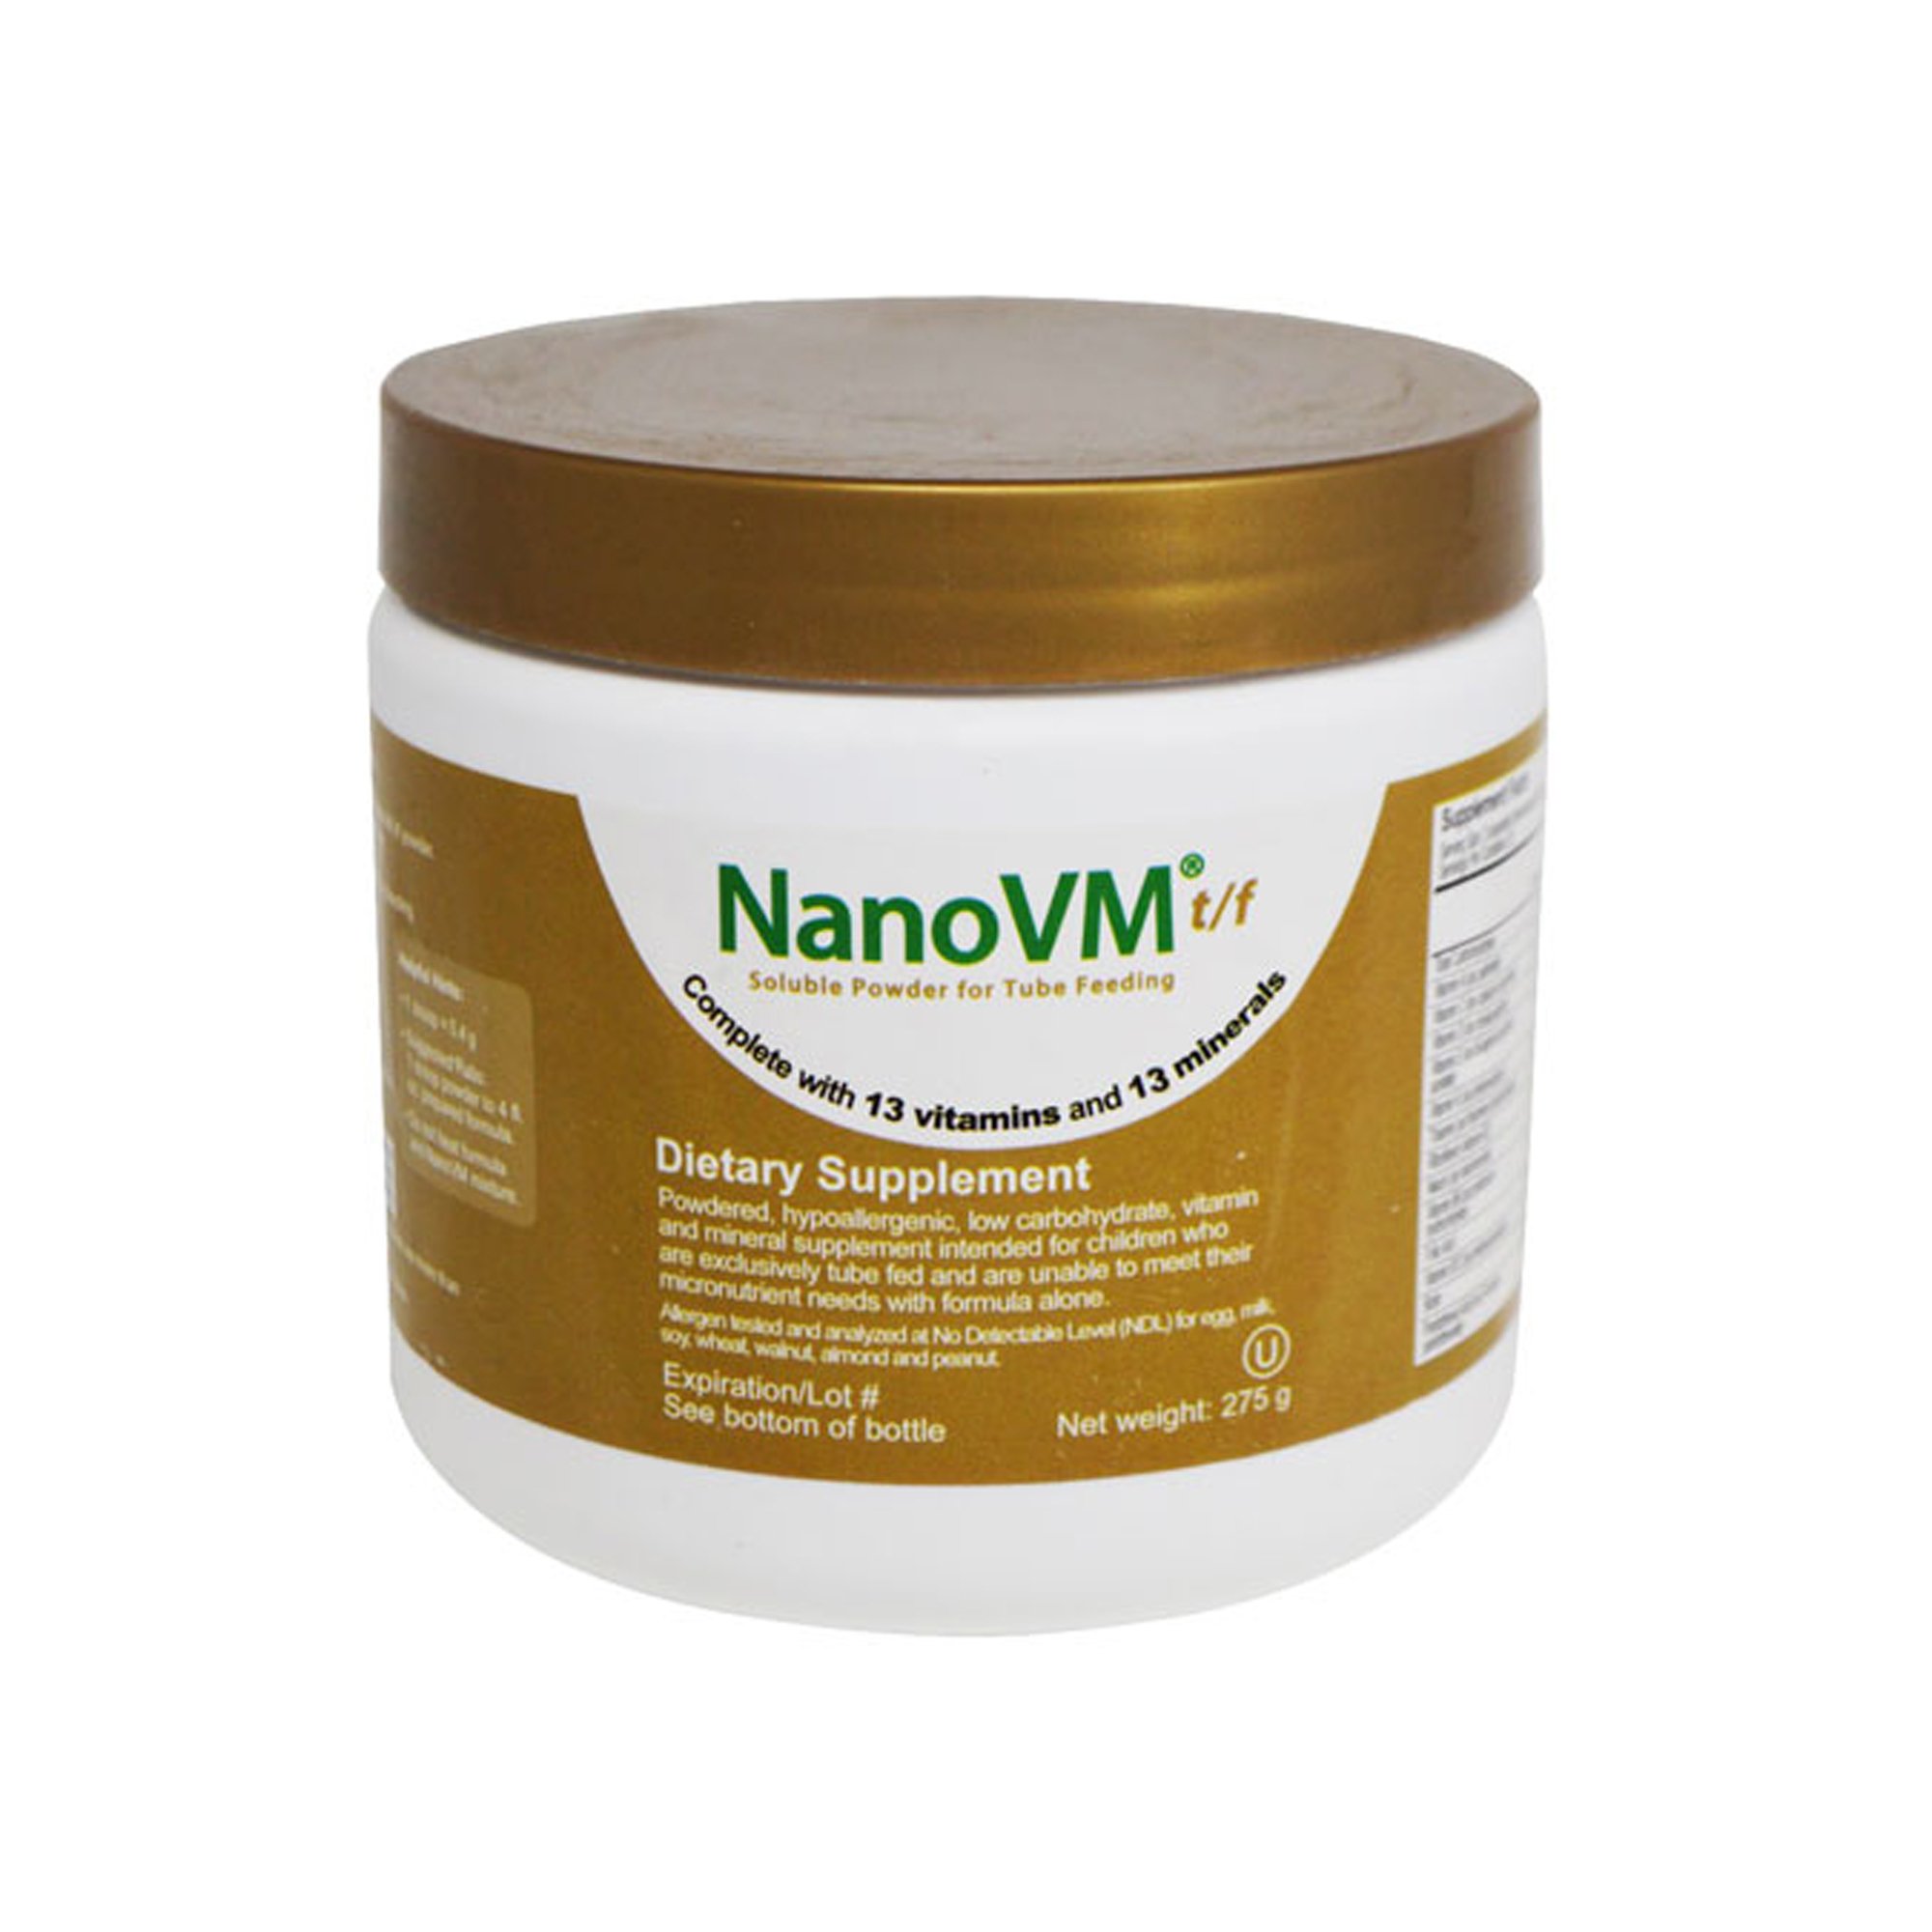 NanoVM tf Powder Pediatric Tube Feeding Formula, 275 Gram Jar